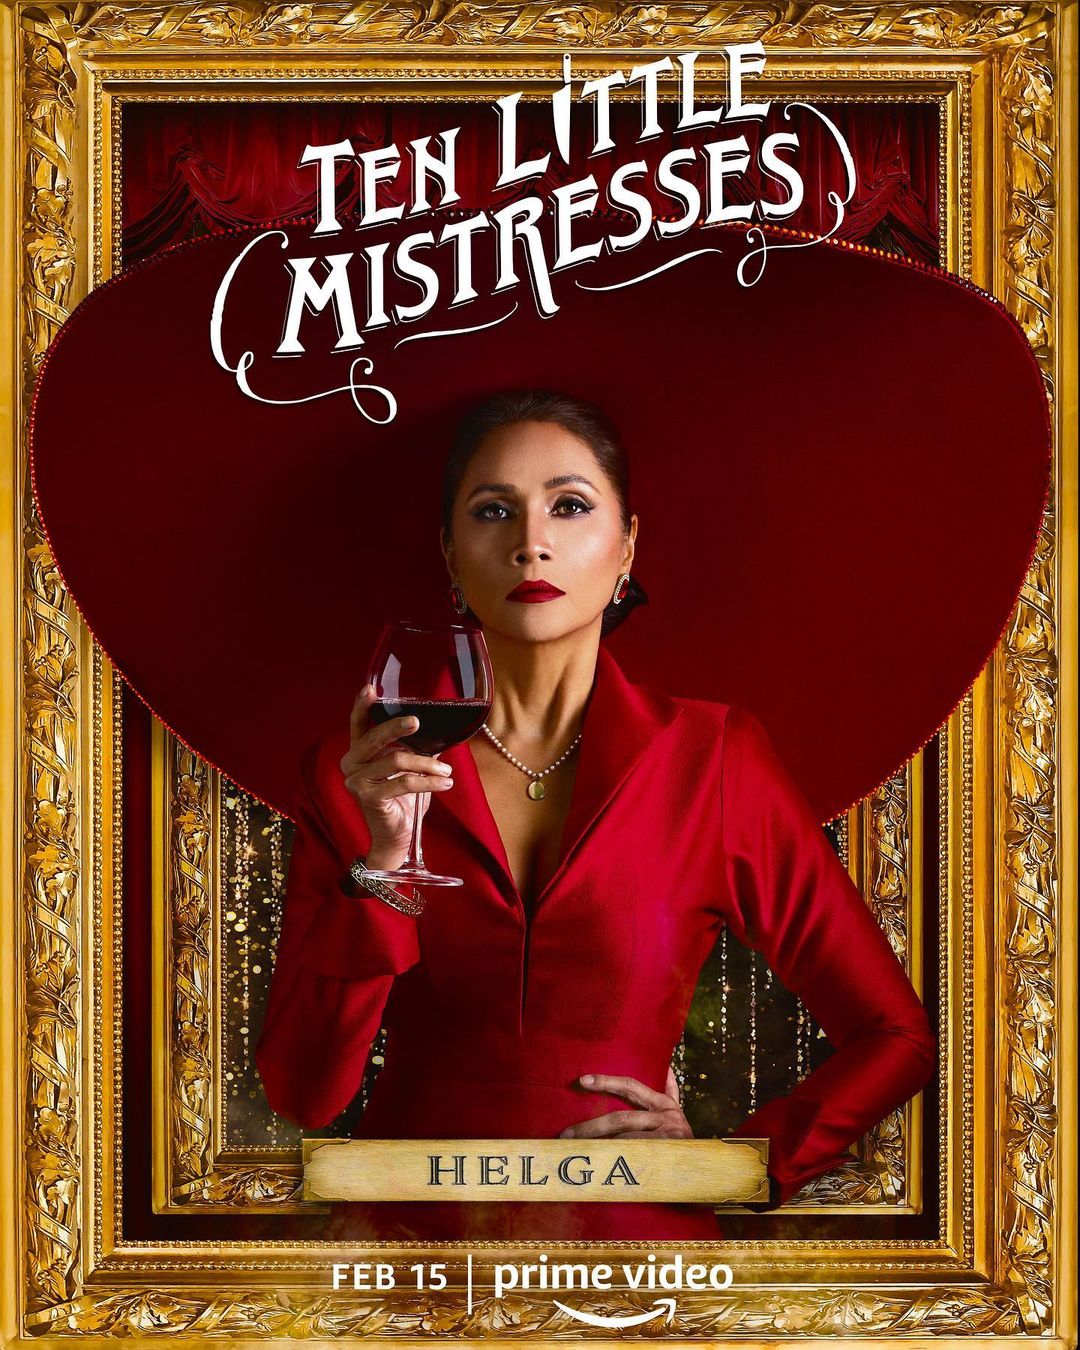 Ten Little Mistresses : Agot Isidro as Helga